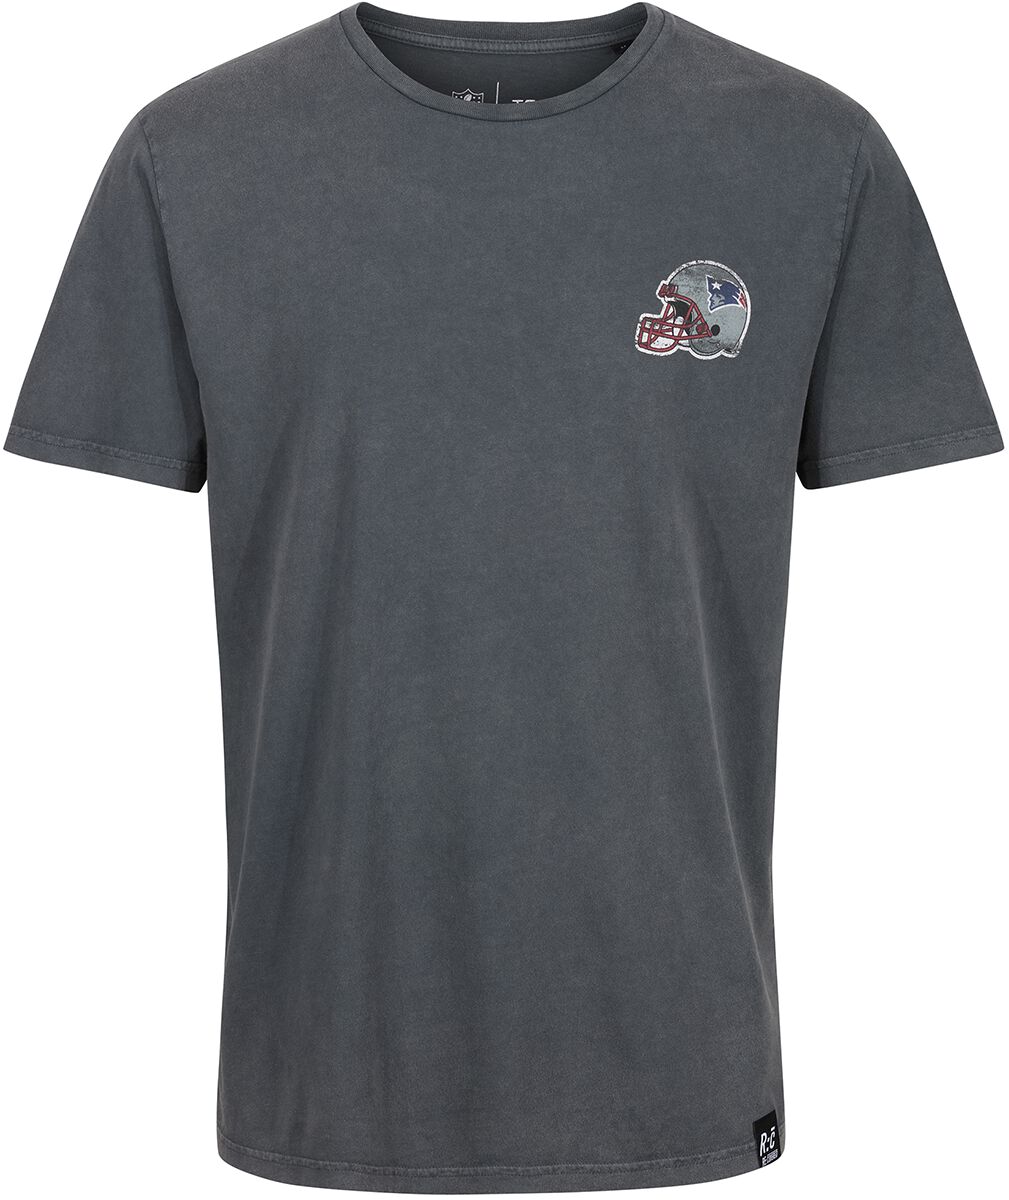 Recovered Clothing T-Shirt - NFL Patriots College Black Washed - S bis XXL - für Männer - Größe S - multicolor